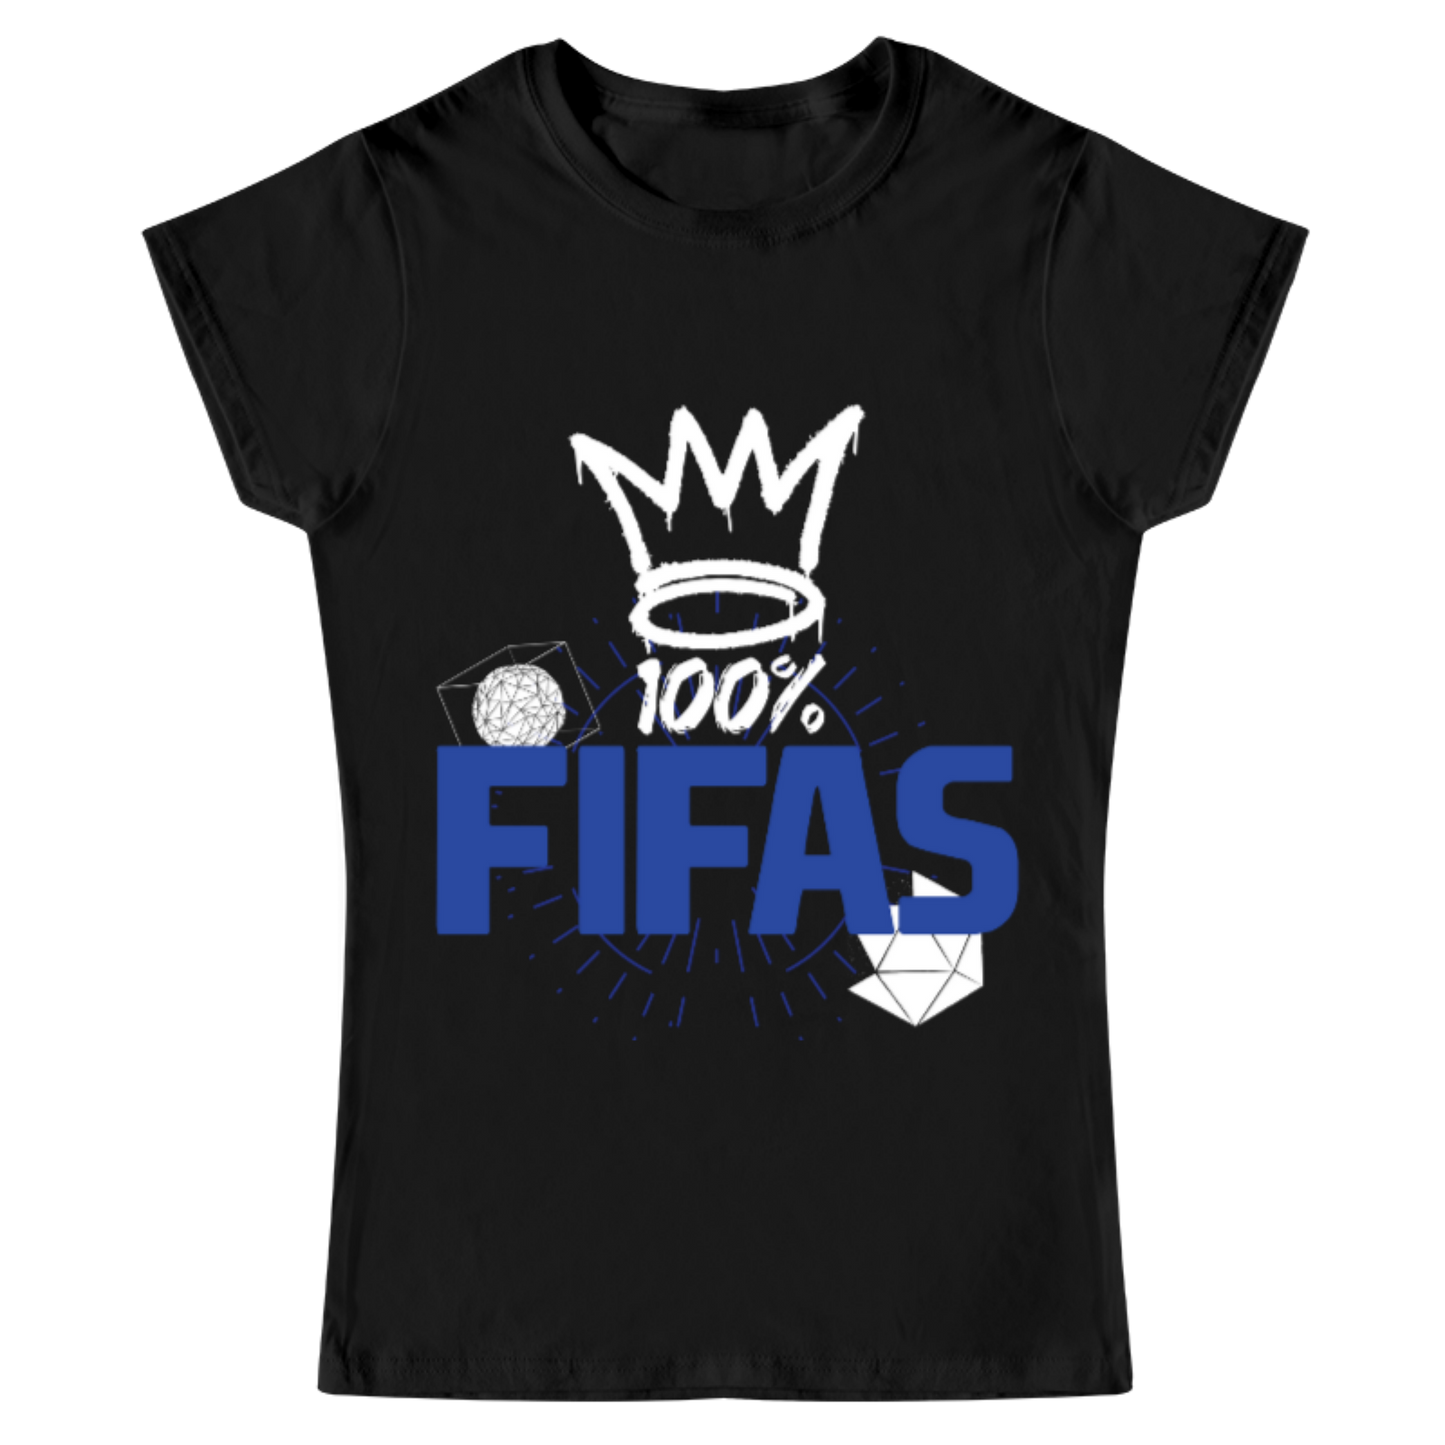 WEREVERWERO 100% FIFAS WOMEN'S T-SHIRT